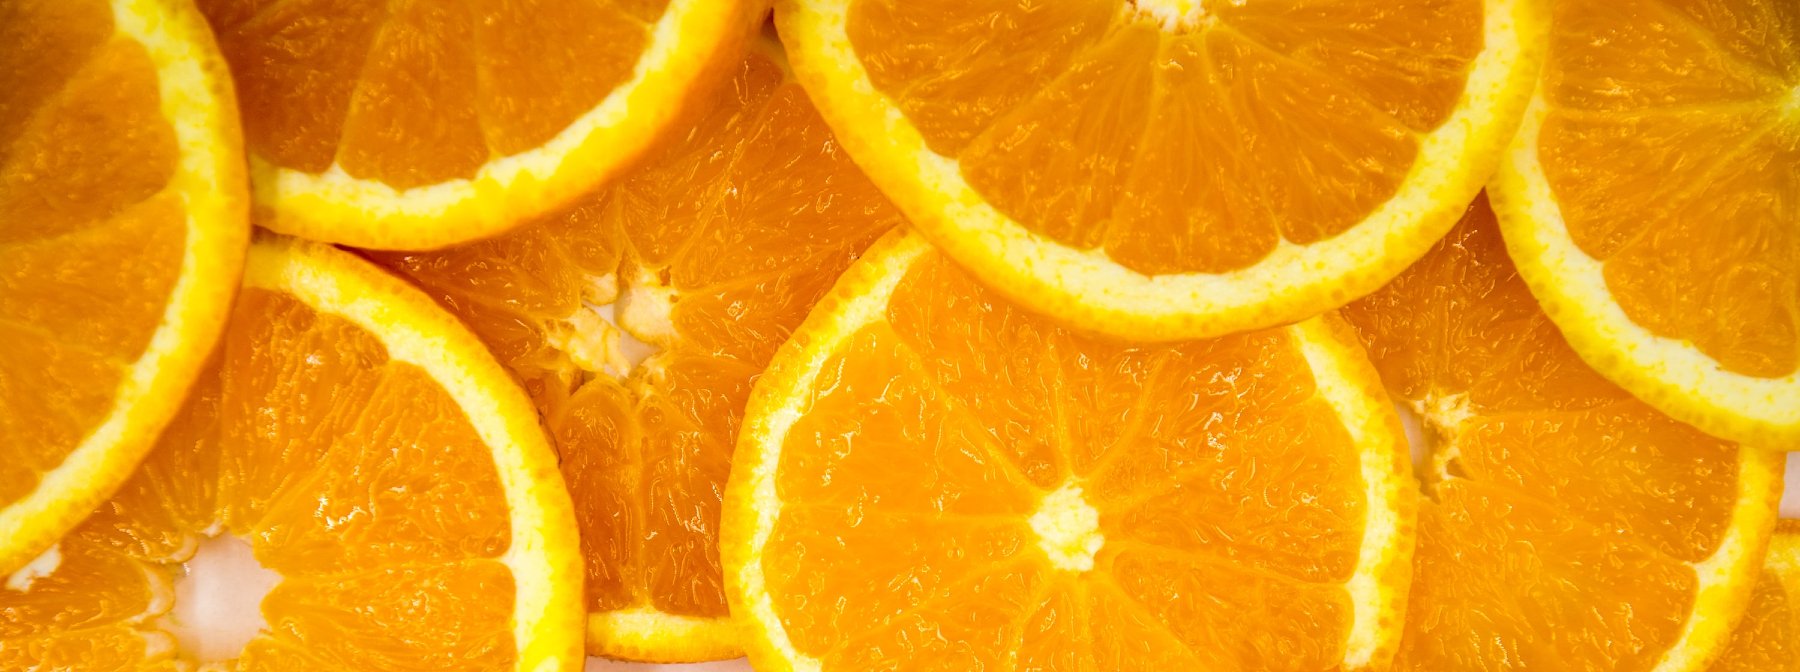 Vitamin C | What is it? Benefits? Deficiency Symptoms? Sources?